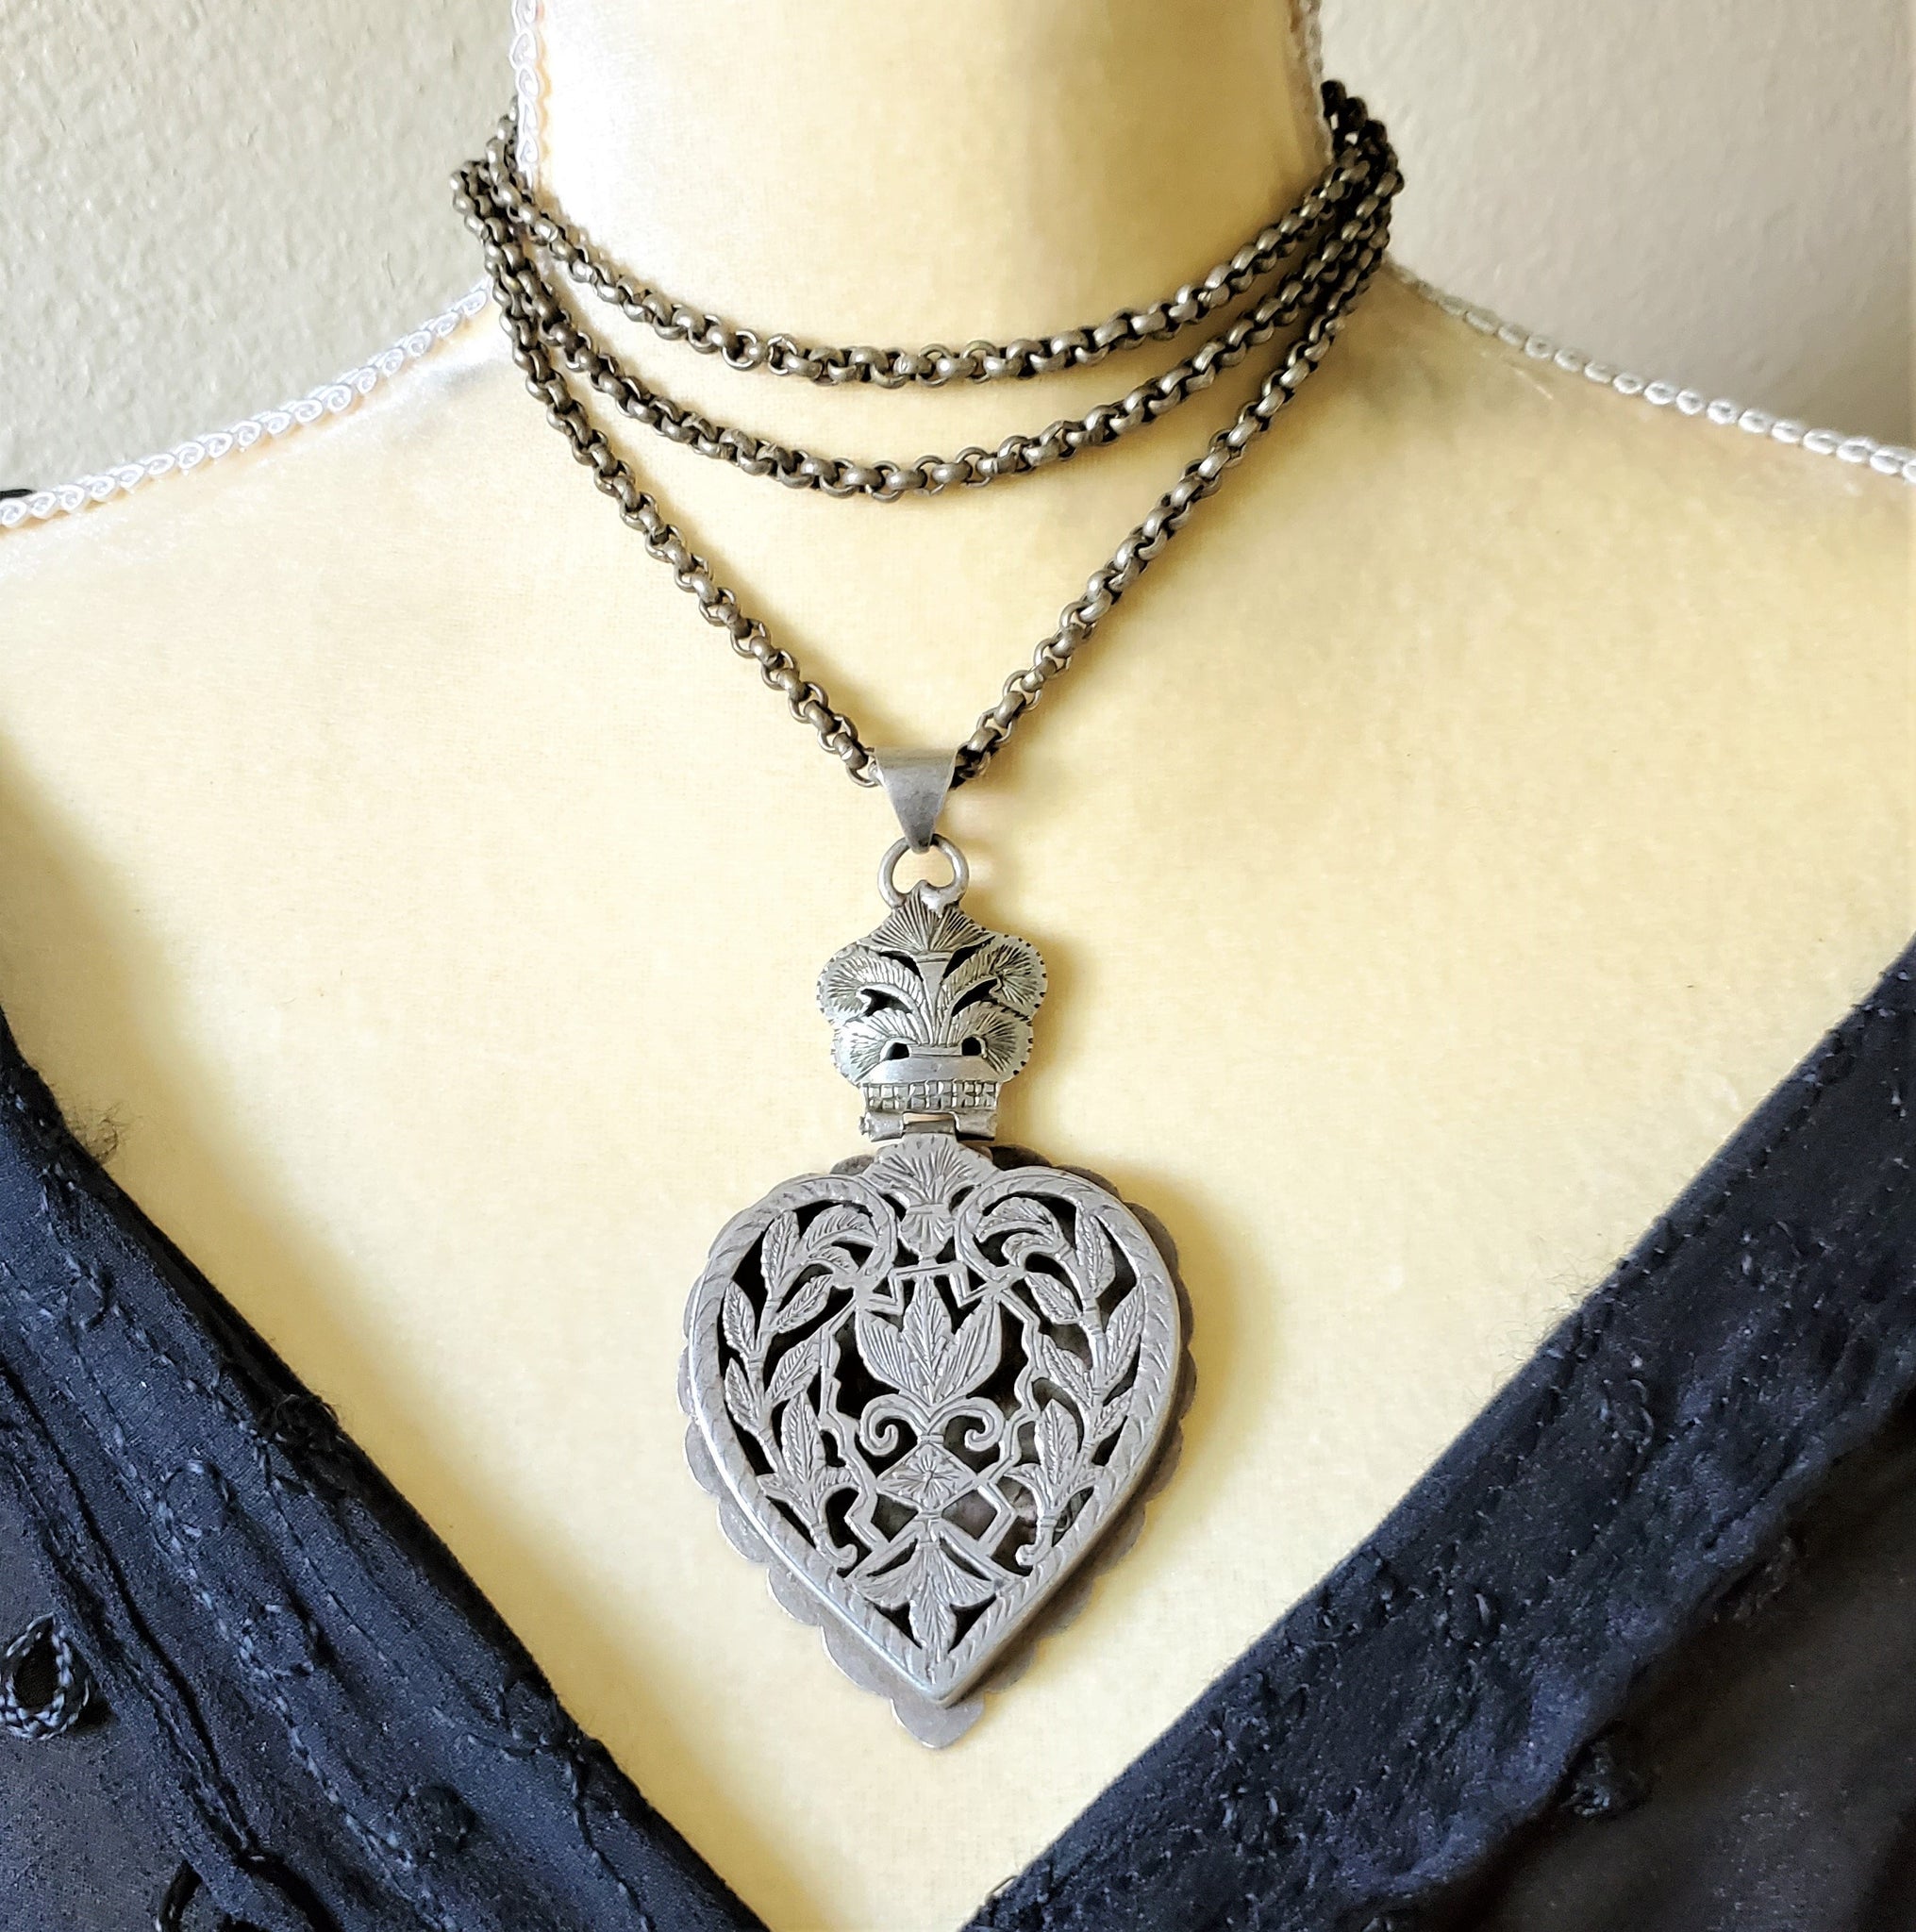 Stunning Necklace Handmade Sterling Silver Hammer Finish Large Heart Pendant